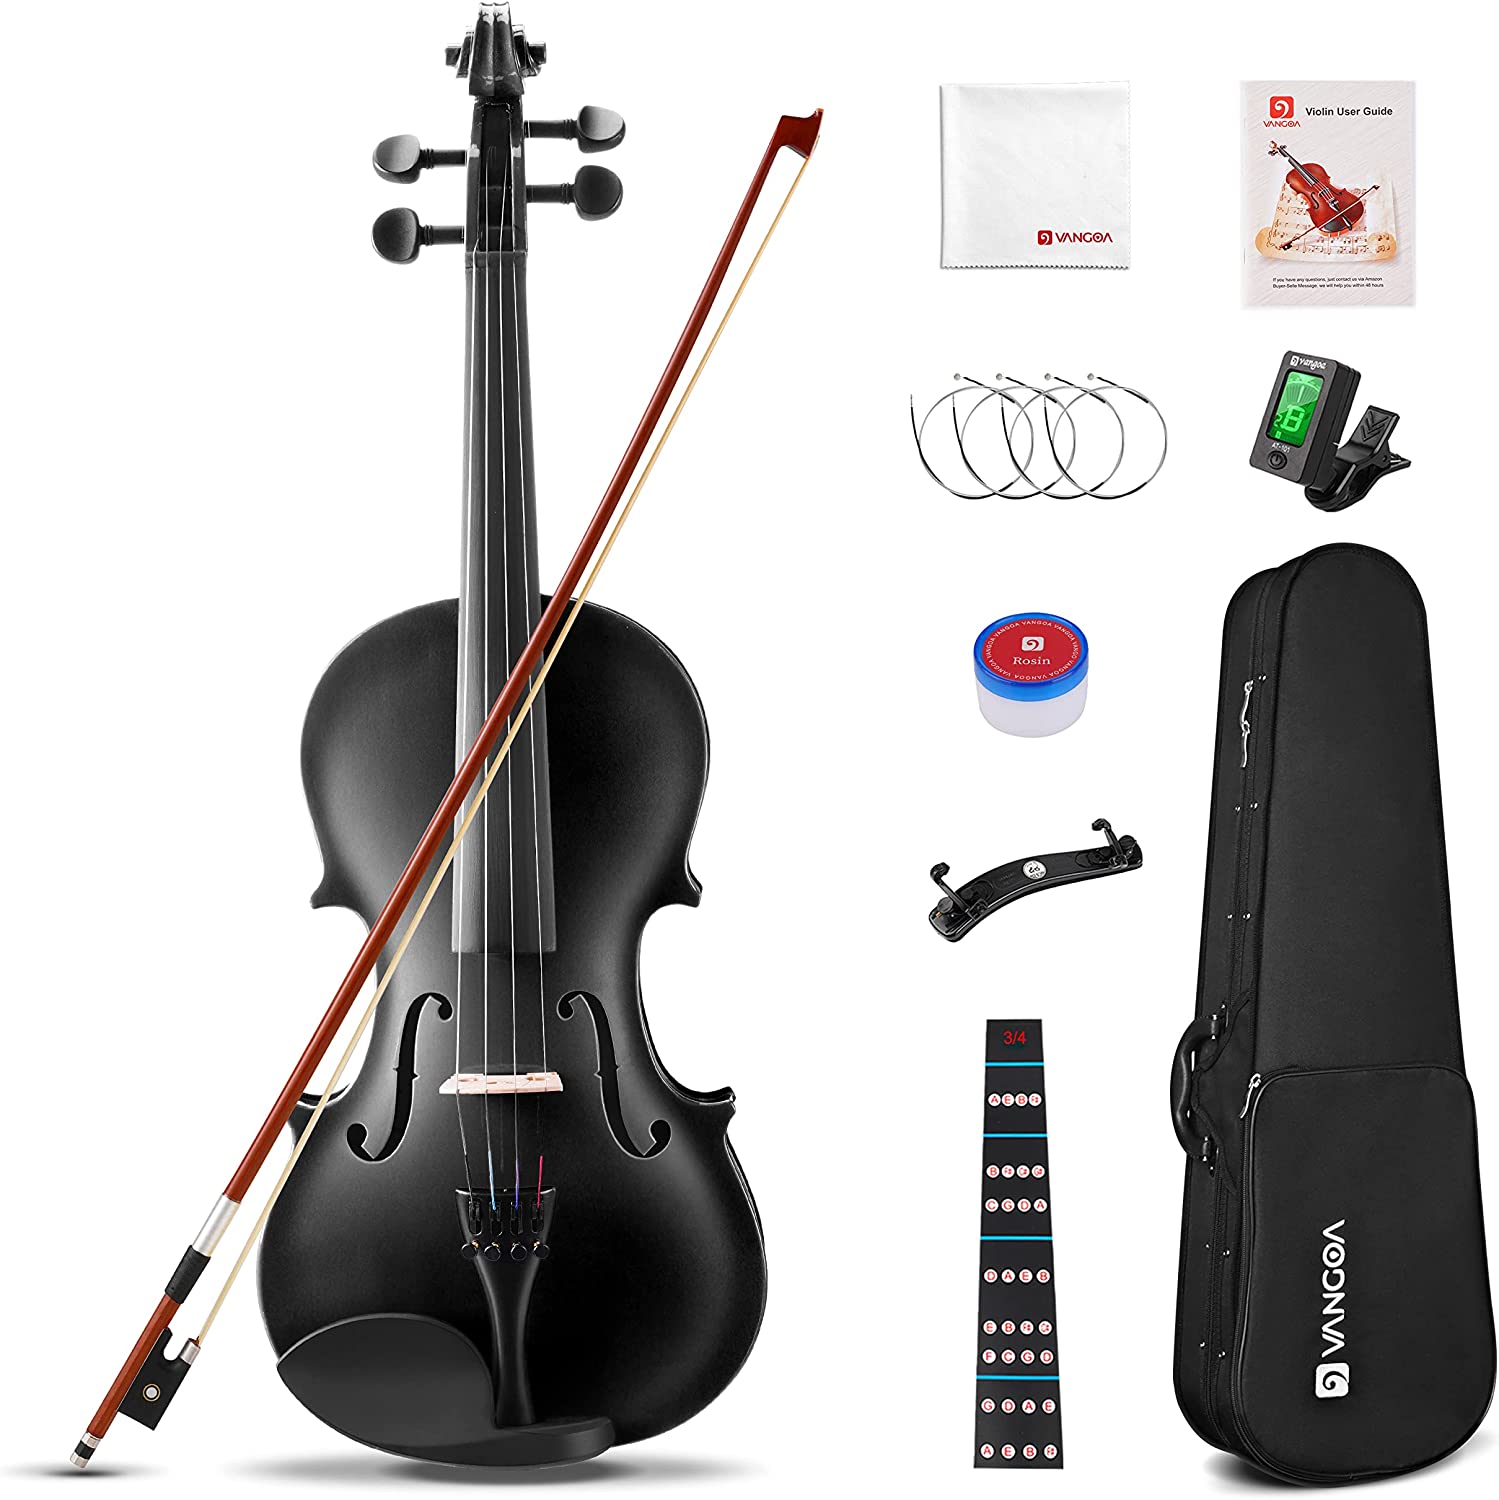 available on Amazon]Vangoa 4/4 Acoustic Violin